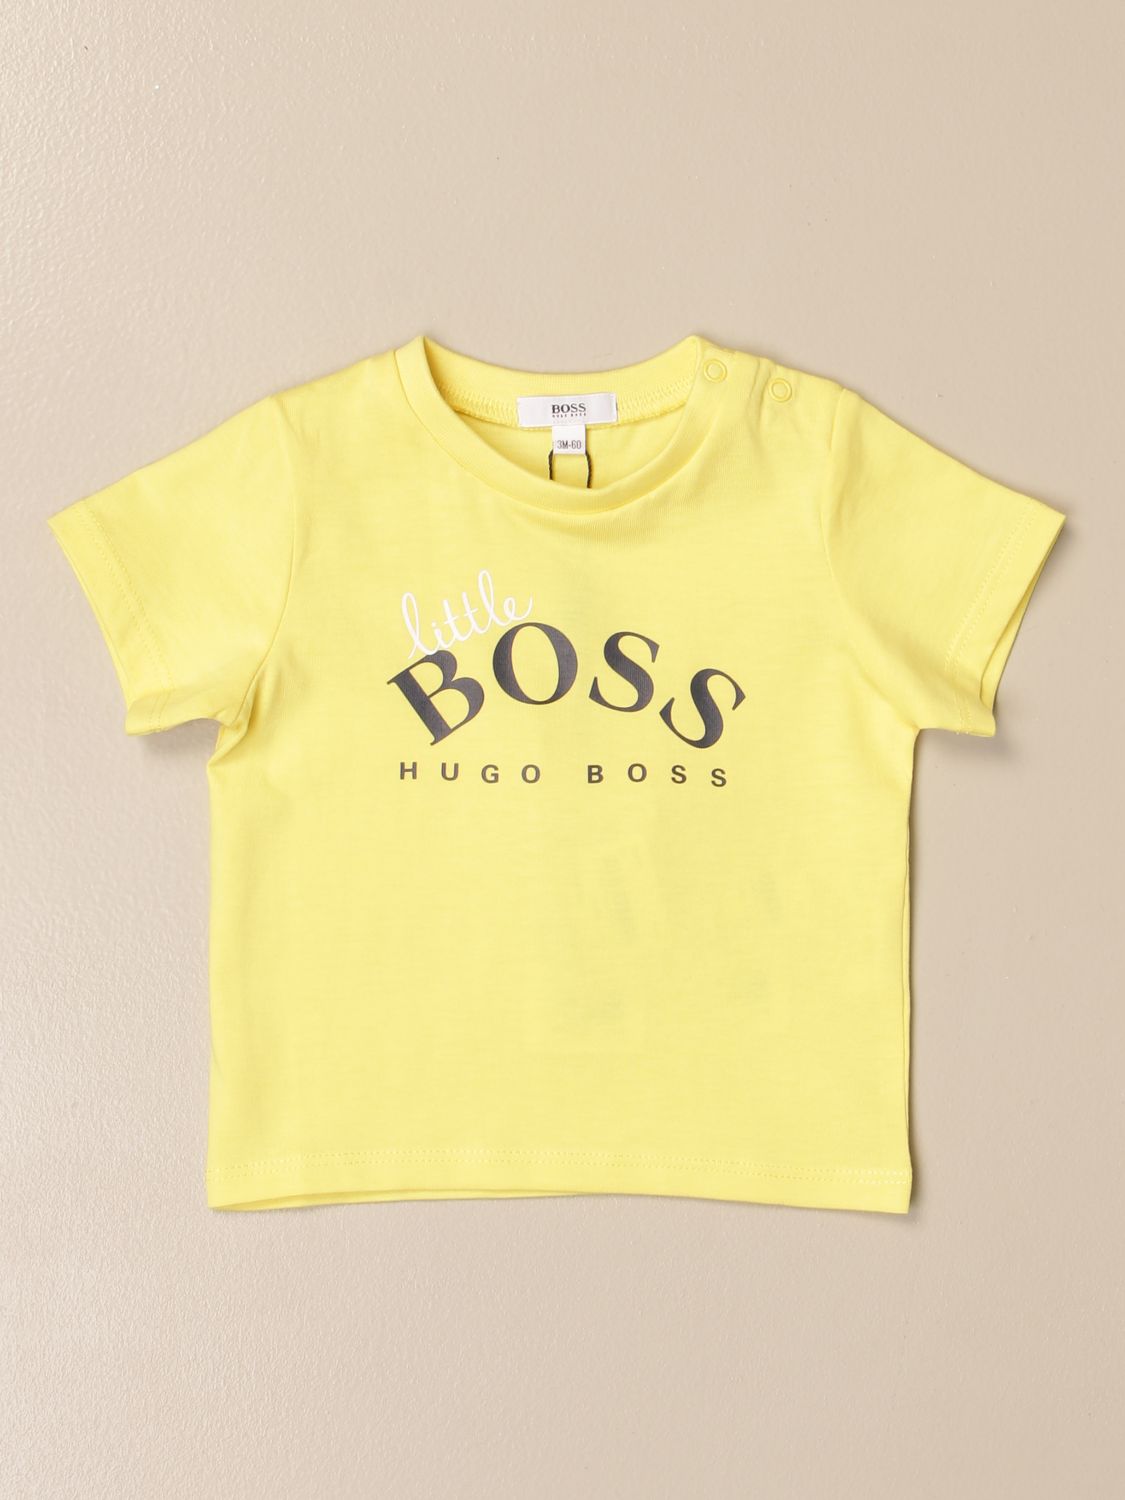 hugo boss kids shirt